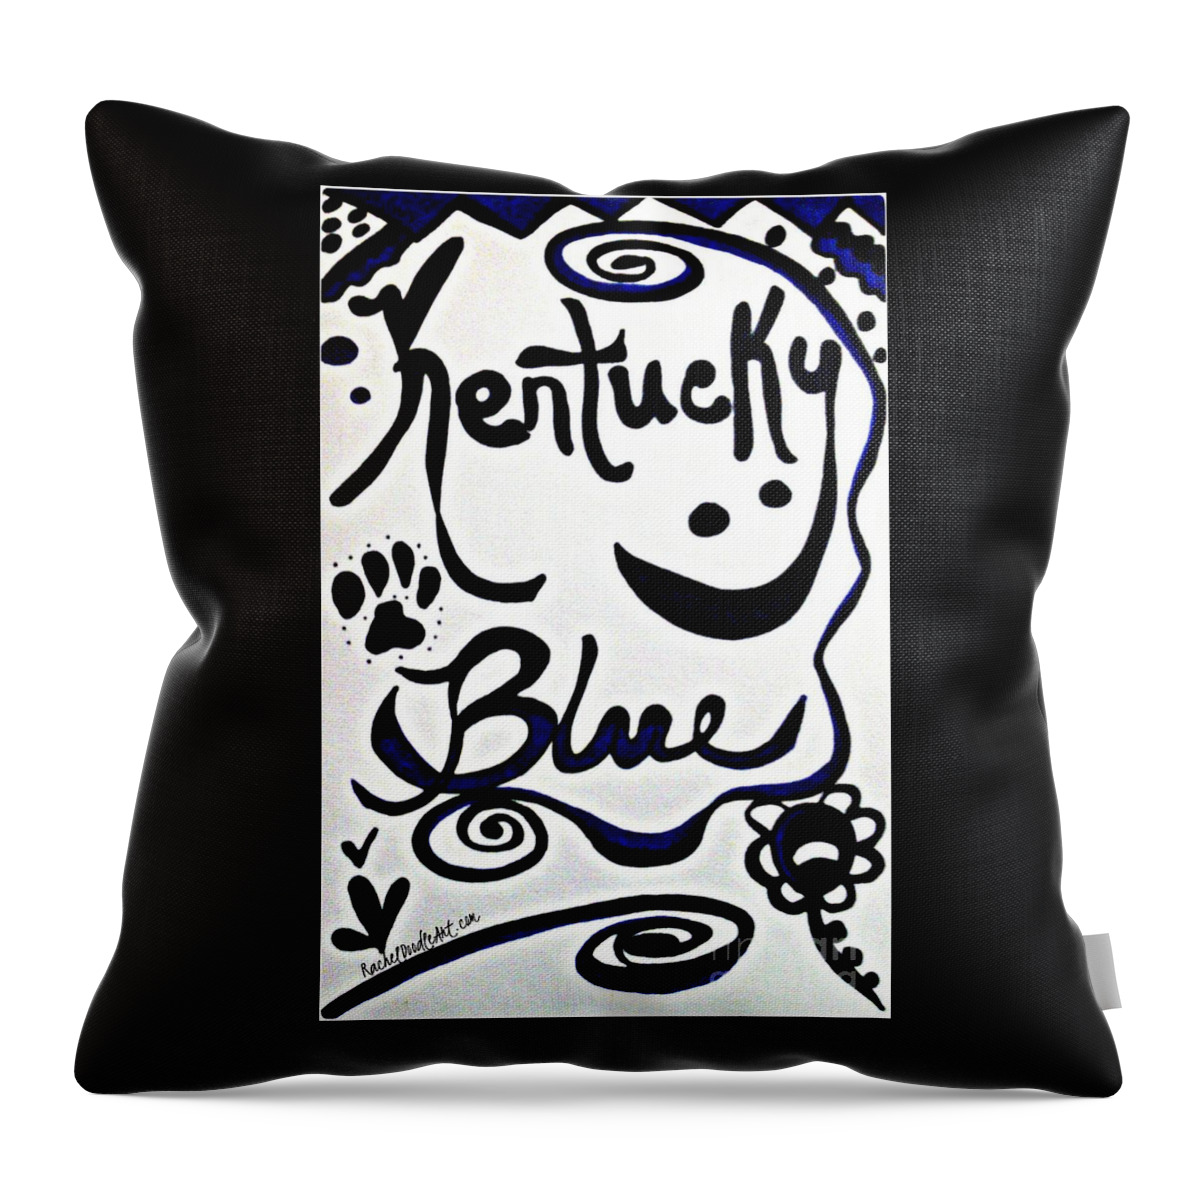 Doodle Throw Pillow featuring the drawing Kentucky Blue by Rachel Maynard